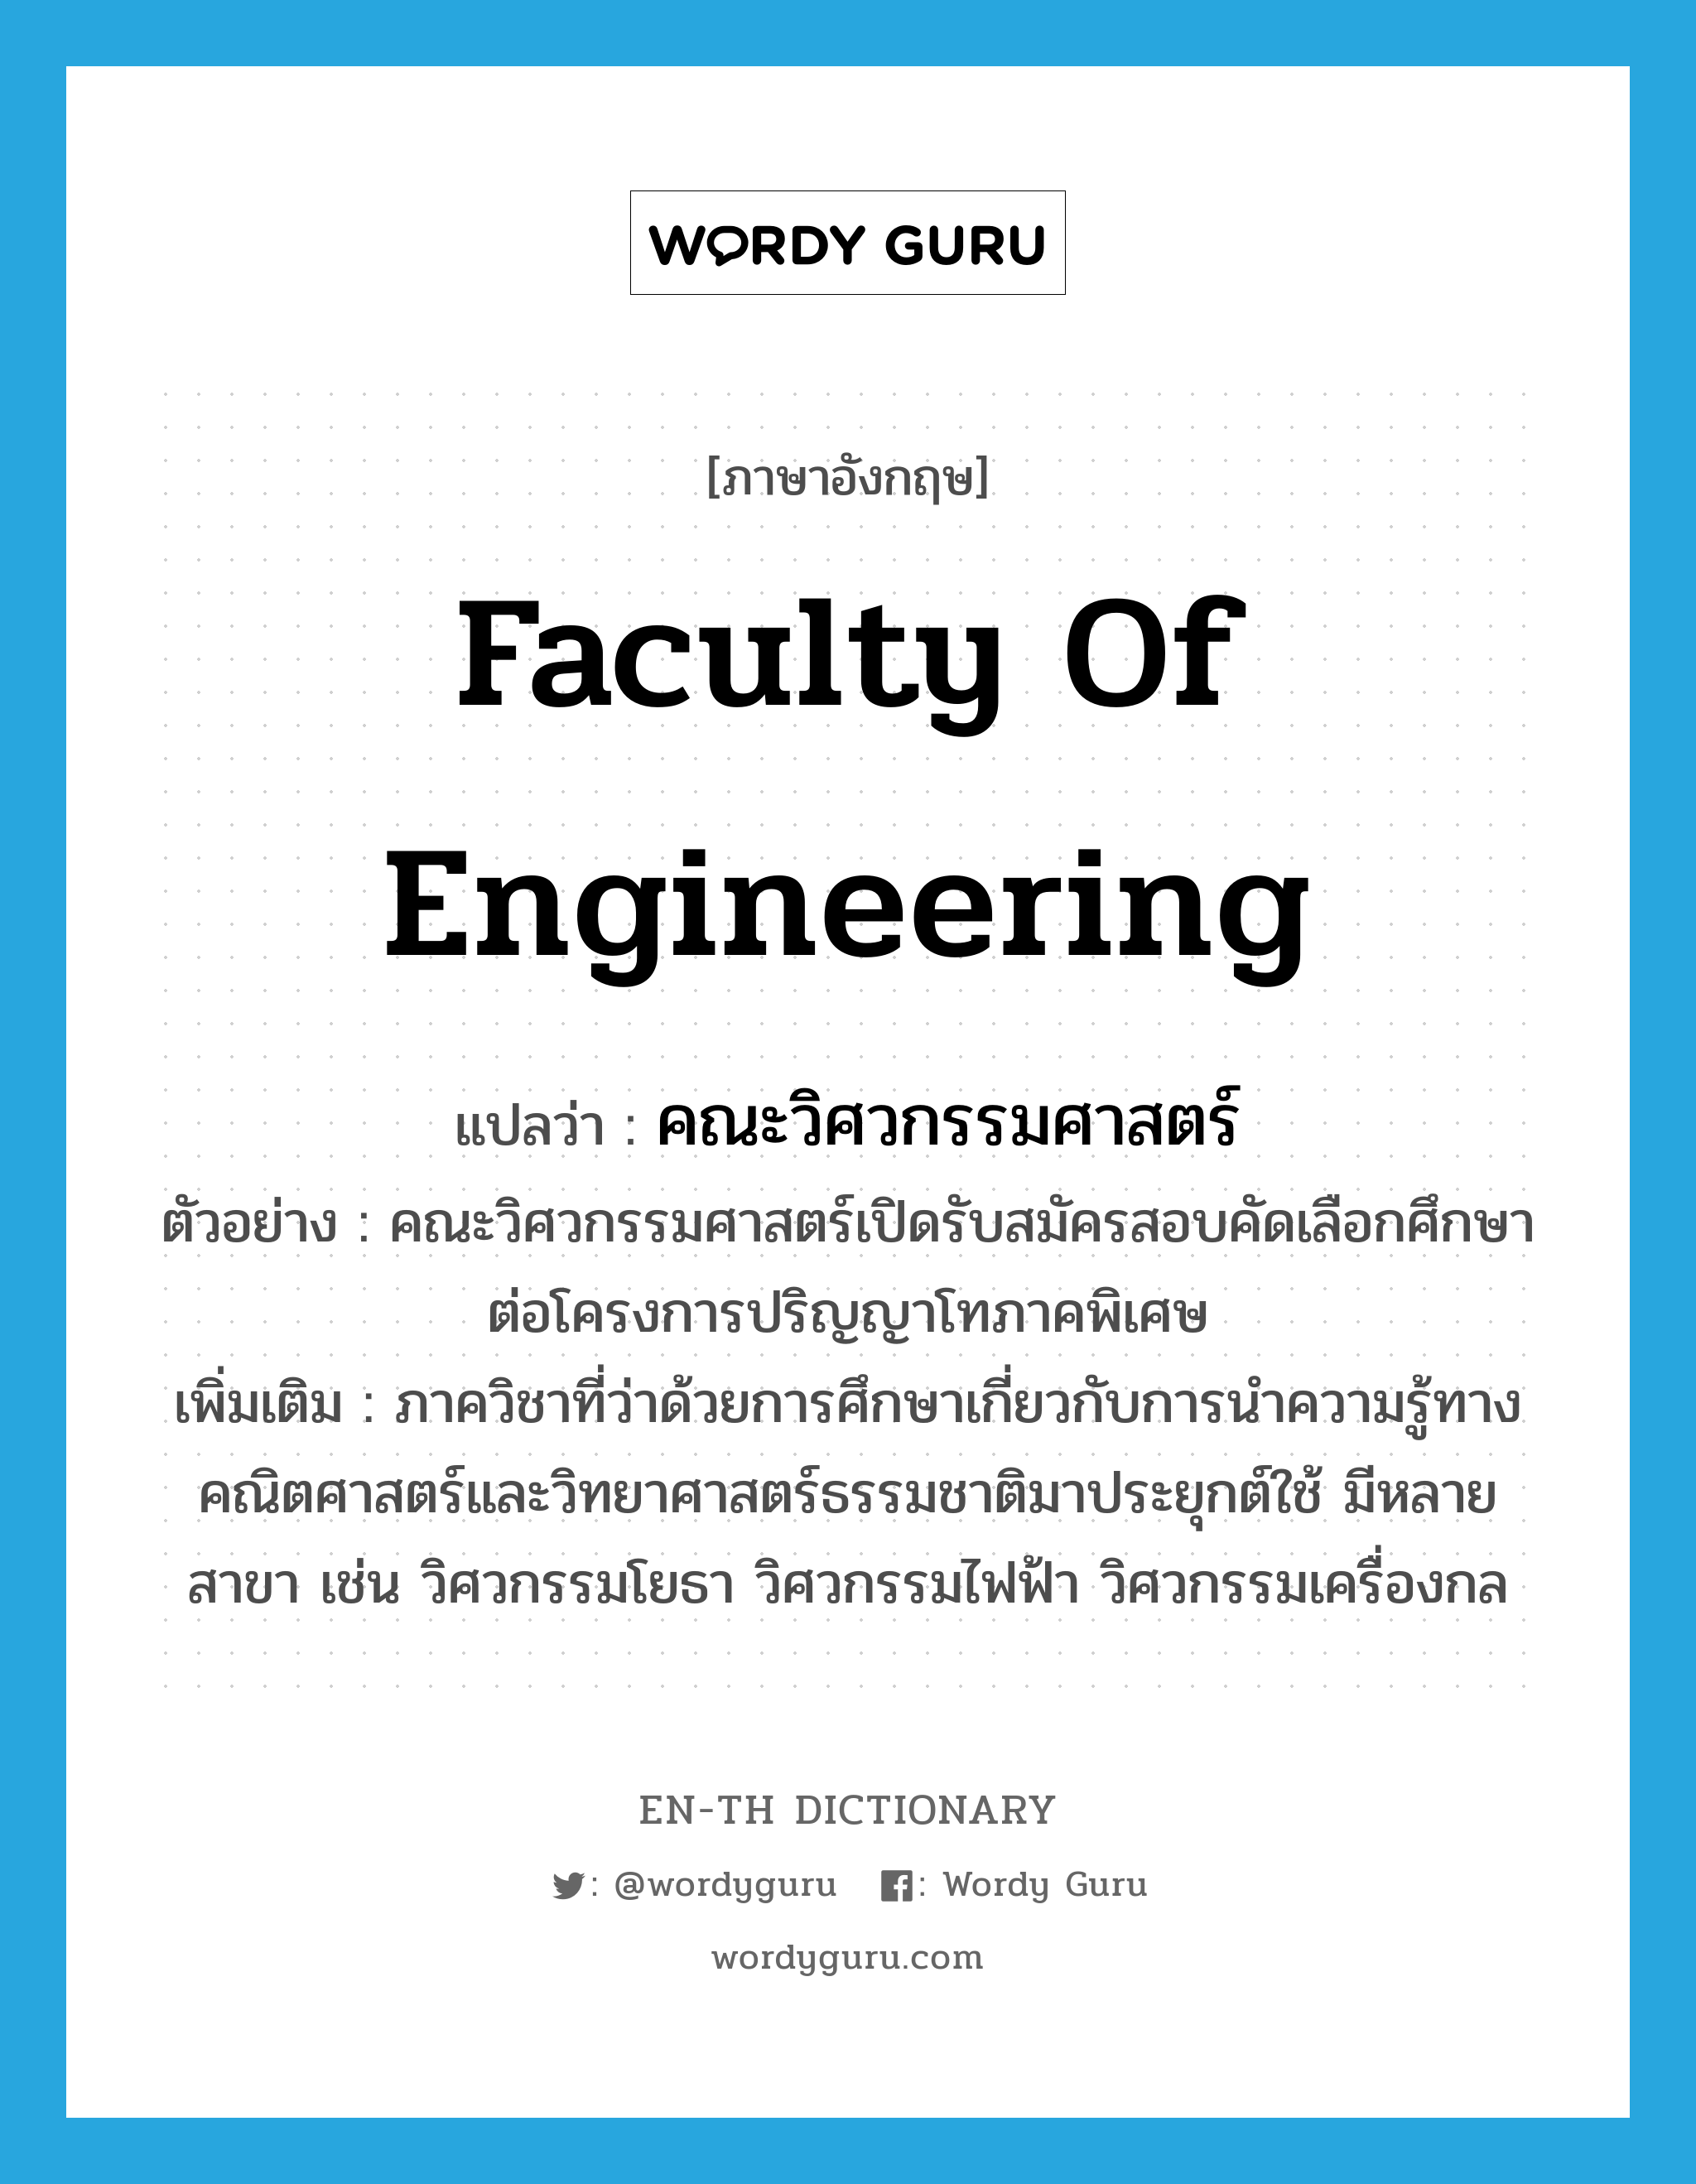 Faculty of Engineering แปลว่า?, คำศัพท์ภาษาอังกฤษ Faculty of Engineering แปลว่า คณะวิศวกรรมศาสตร์ ประเภท N ตัวอย่าง คณะวิศวกรรมศาสตร์เปิดรับสมัครสอบคัดเลือกศึกษาต่อโครงการปริญญาโทภาคพิเศษ เพิ่มเติม ภาควิชาที่ว่าด้วยการศึกษาเกี่ยวกับการนำความรู้ทางคณิตศาสตร์และวิทยาศาสตร์ธรรมชาติมาประยุกต์ใช้ มีหลายสาขา เช่น วิศวกรรมโยธา วิศวกรรมไฟฟ้า วิศวกรรมเครื่องกล หมวด N